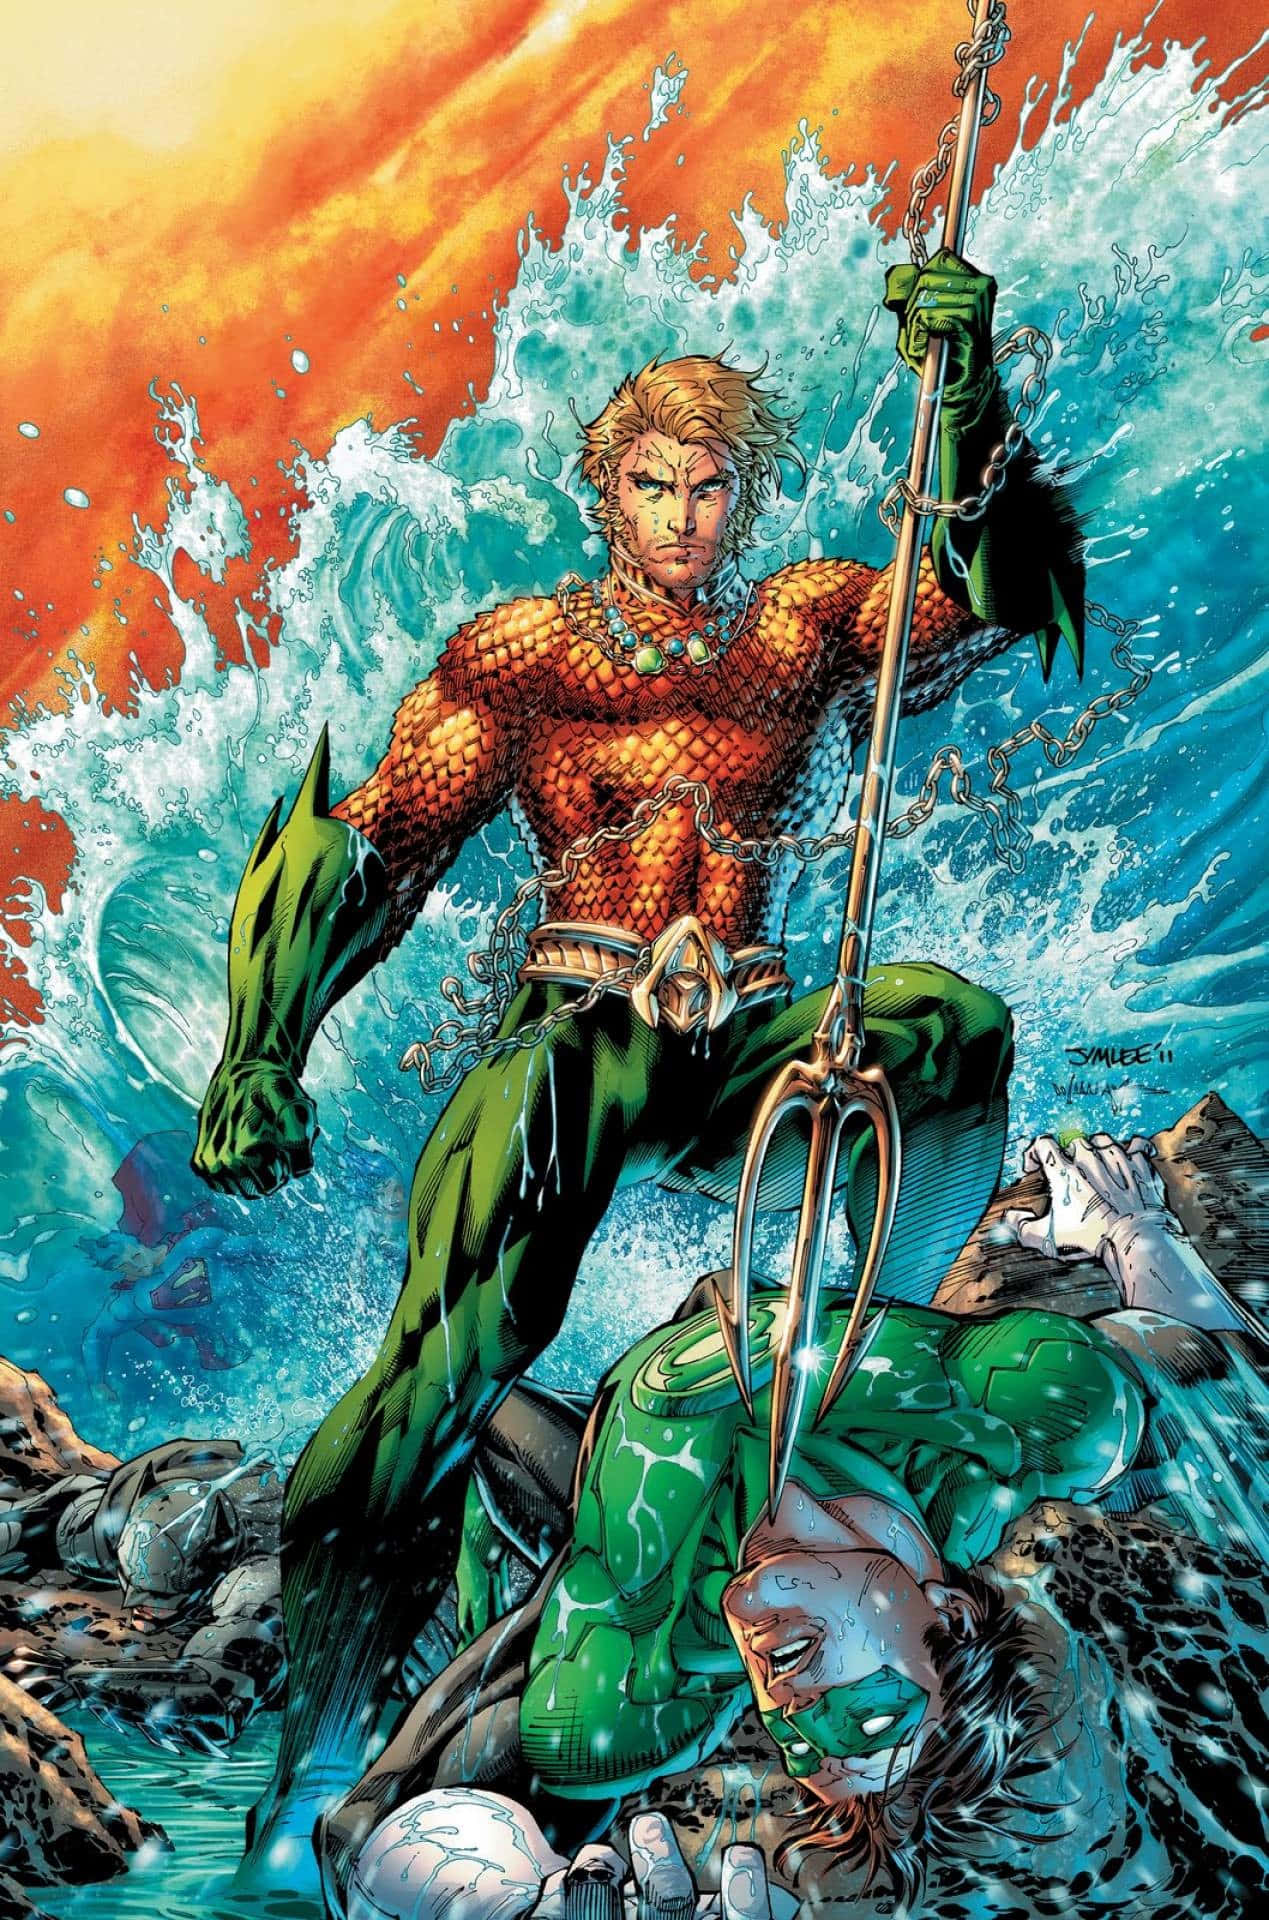 Image  “Aquaman Leads the Way”